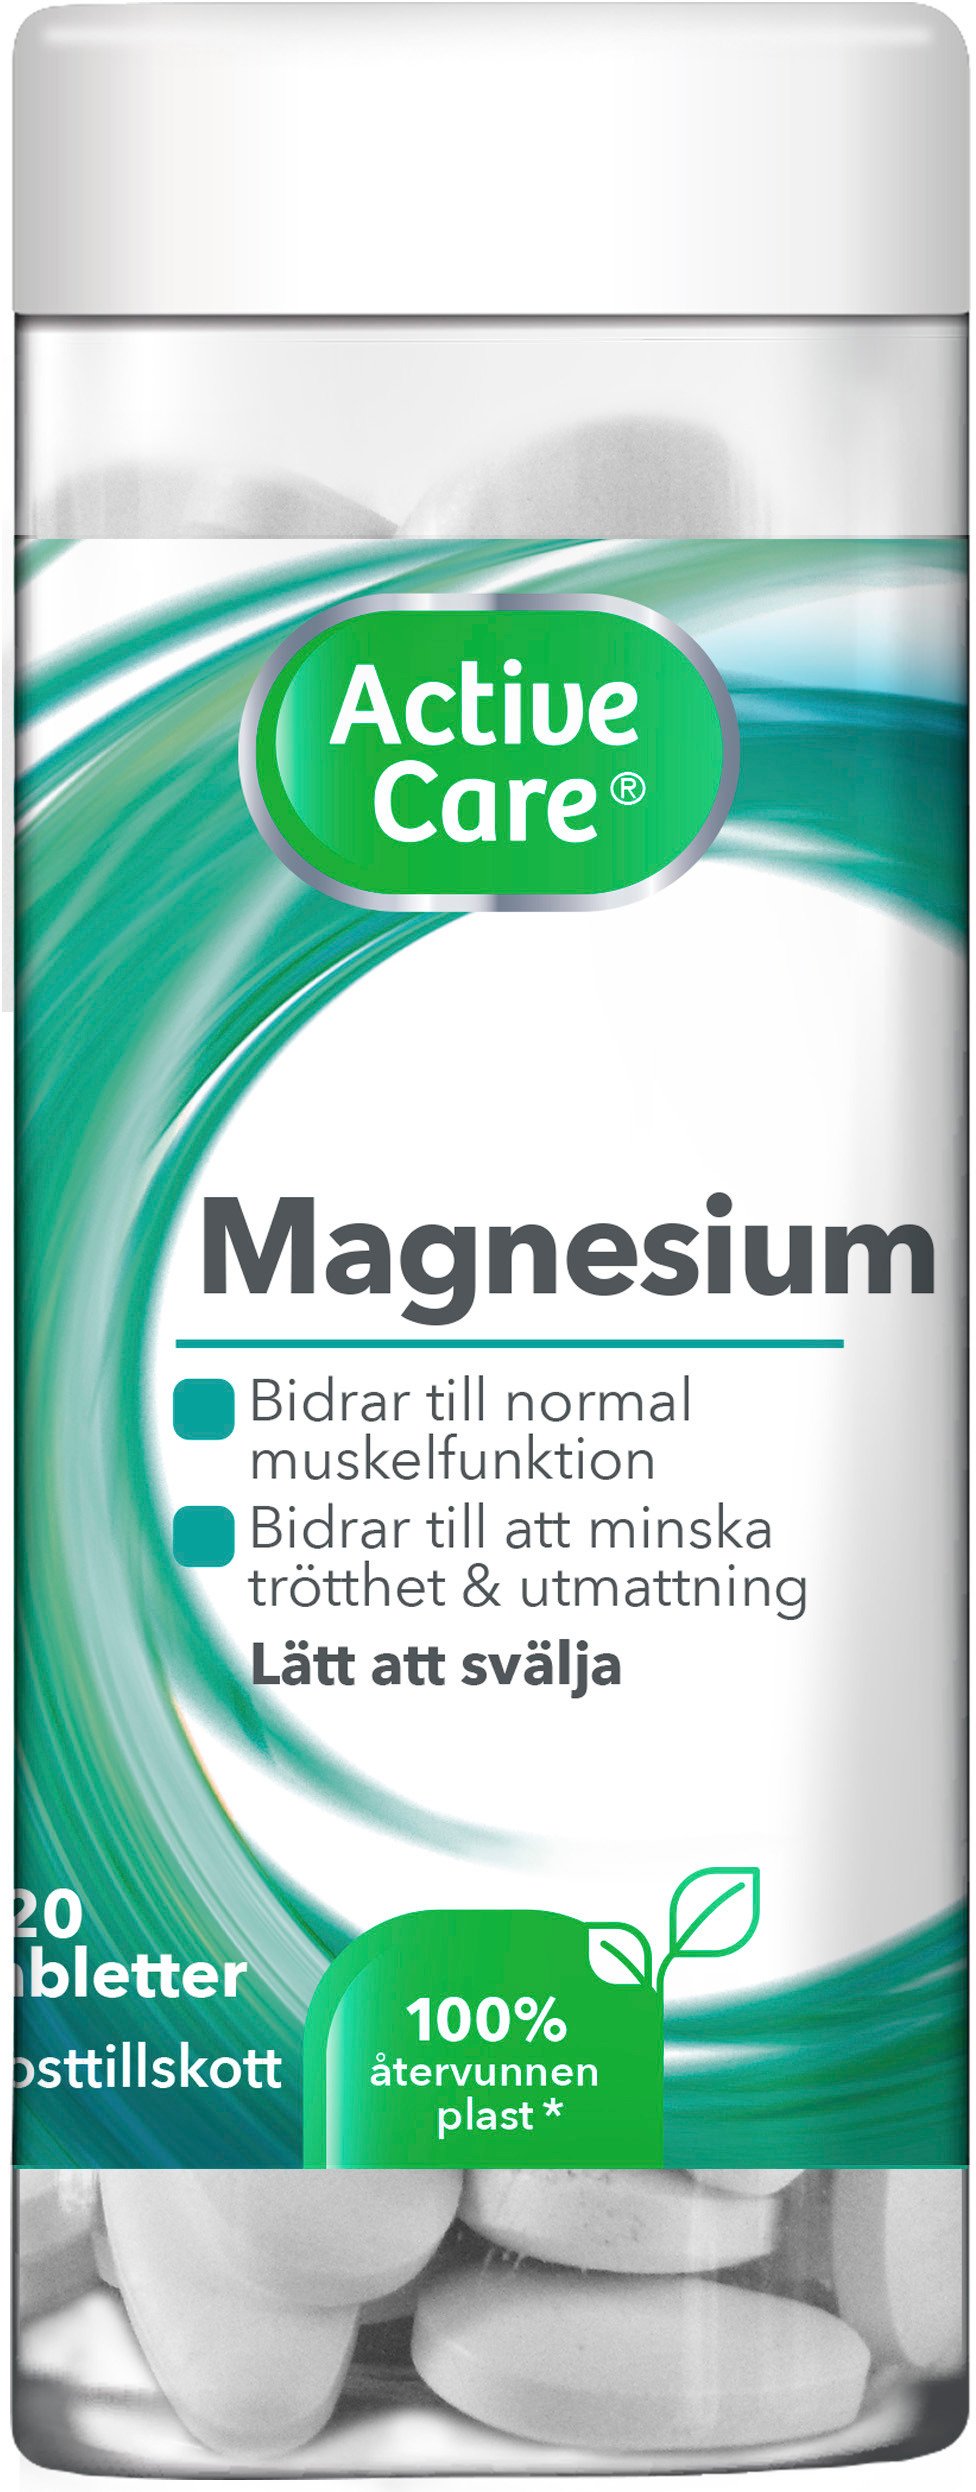 Active Care Magnesium 120 st